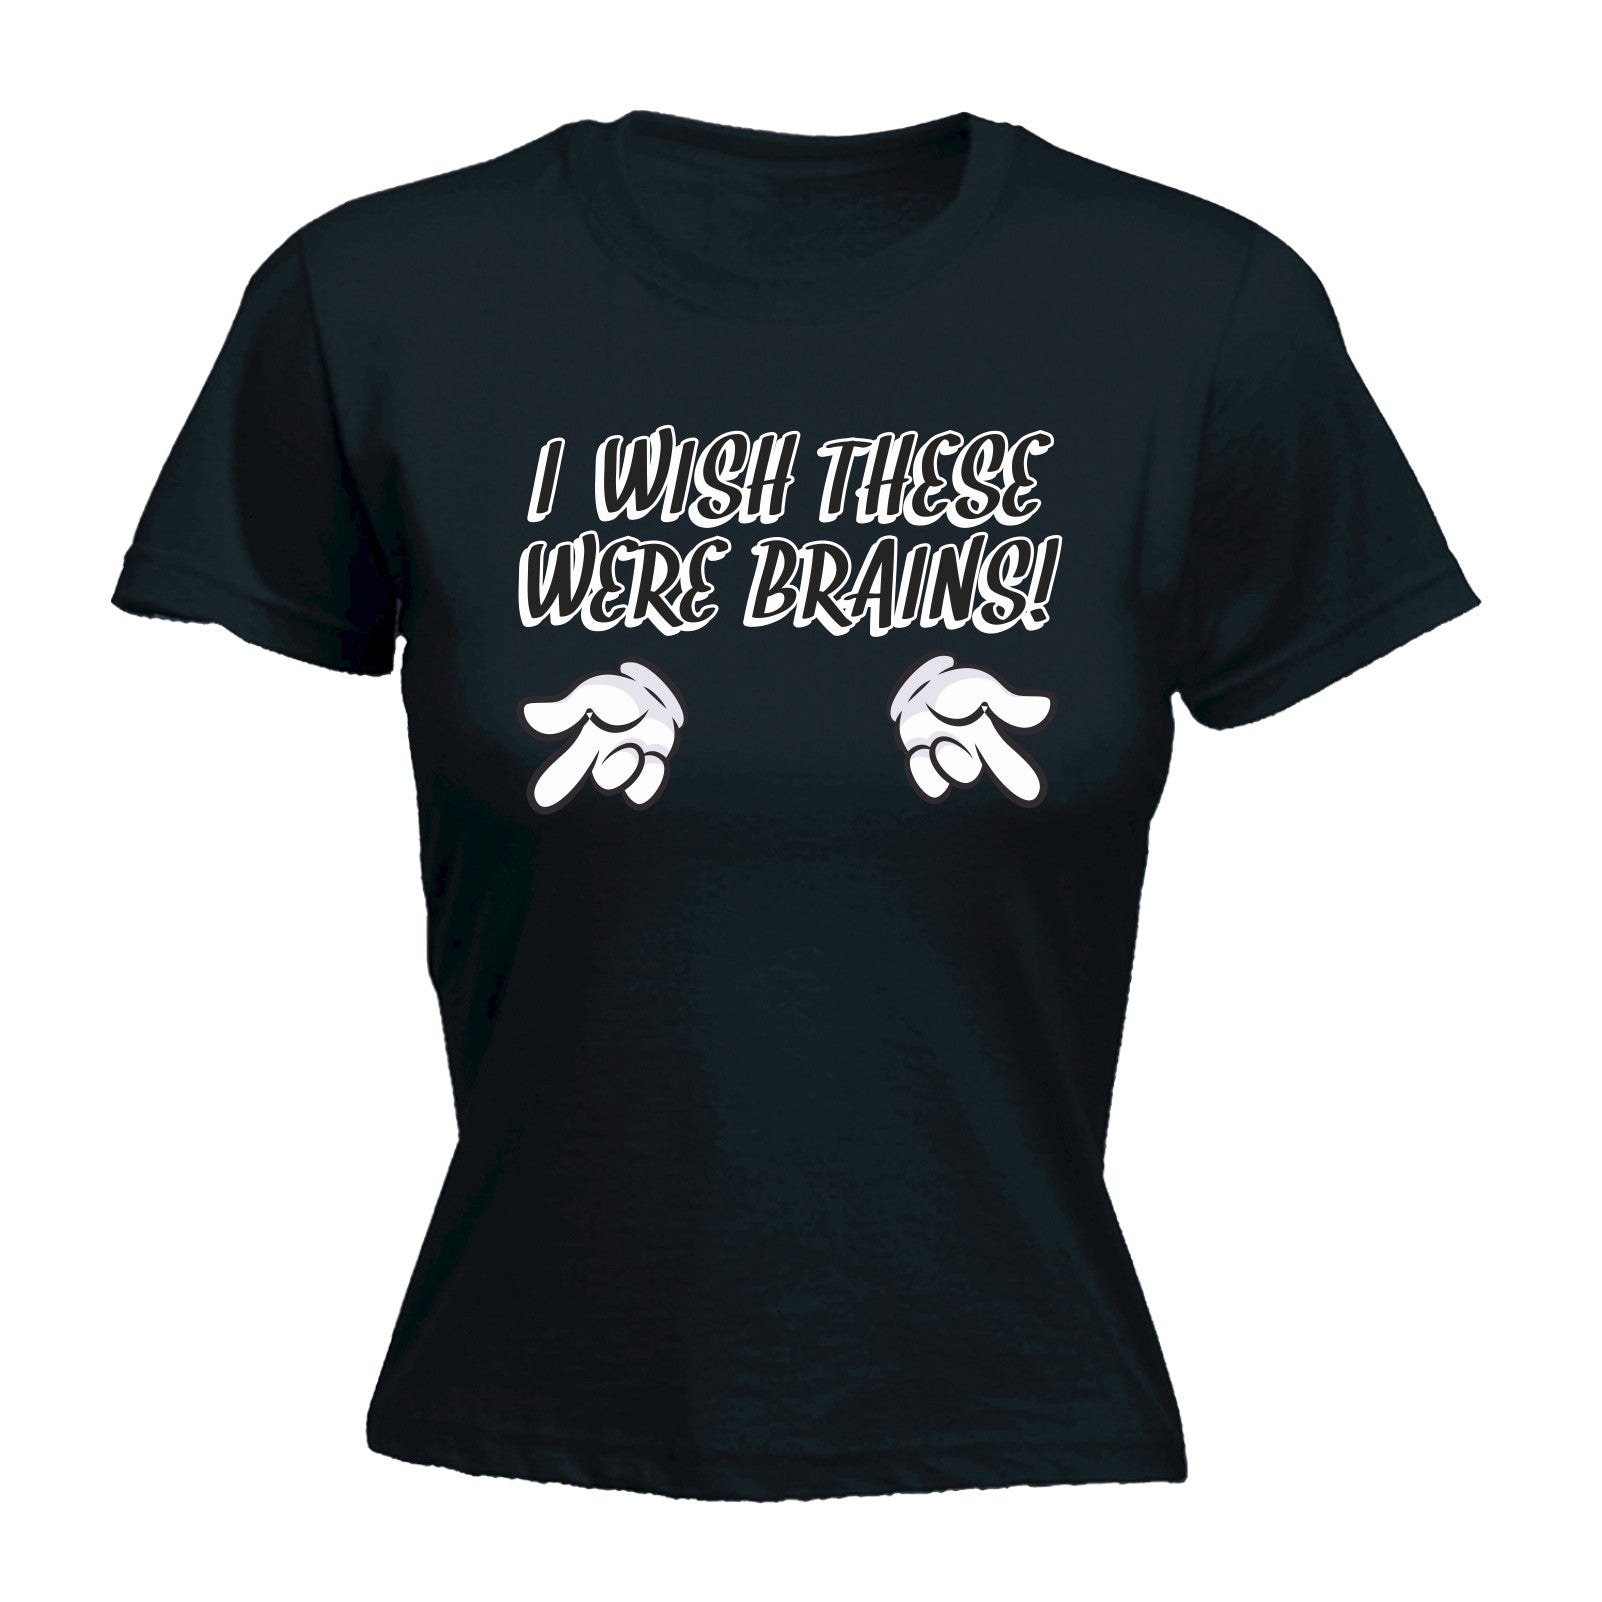 Big Brains Boobs Funny Humor Boob Classic T-Shirt - TourBandTees